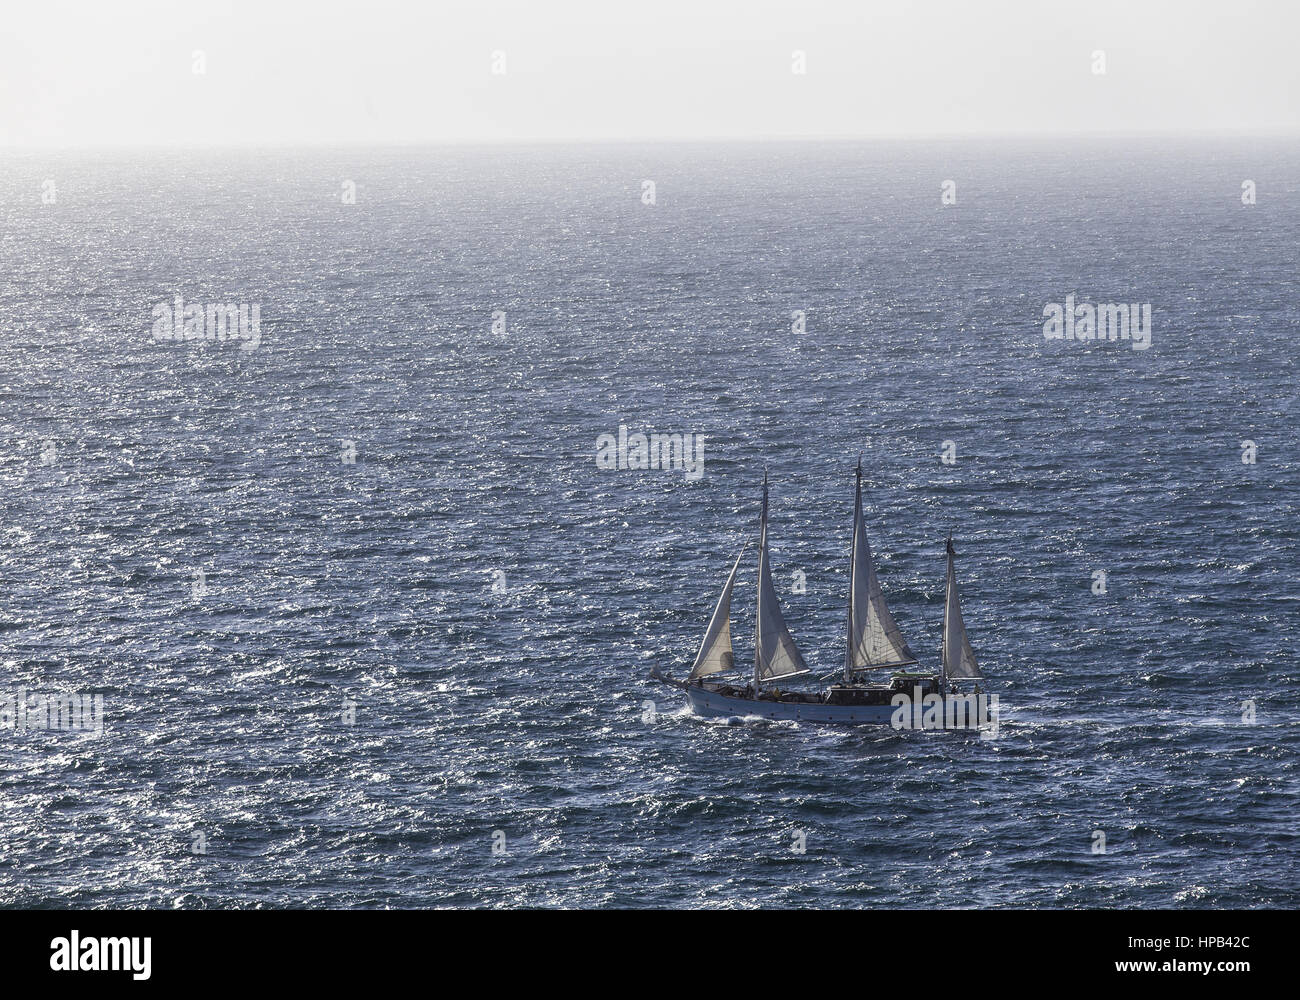 Segelschiff in voller Fahrt Stock Photo